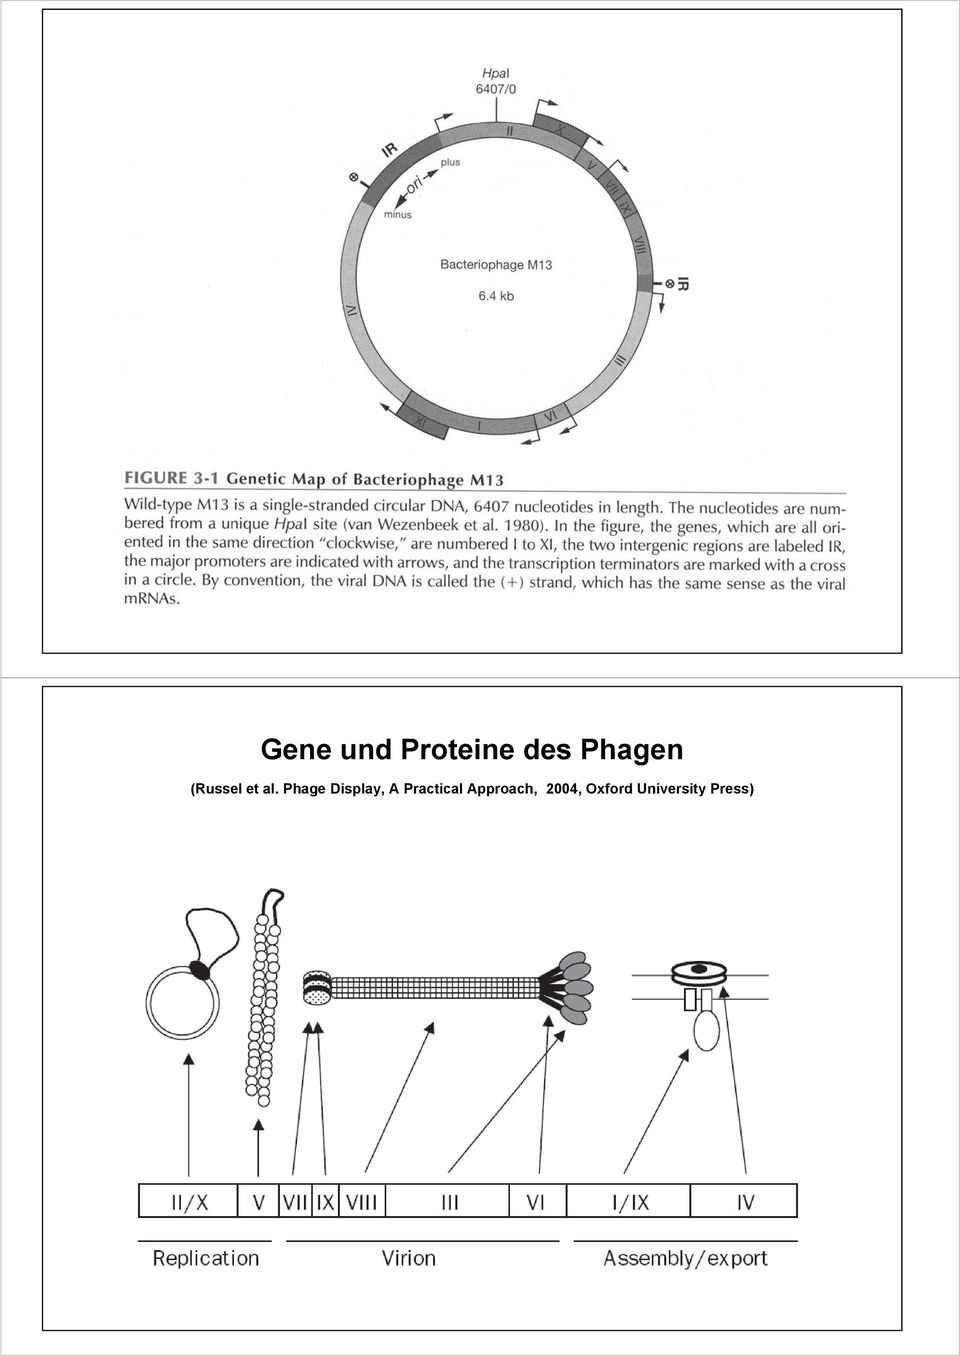 Phage Display, A Practical